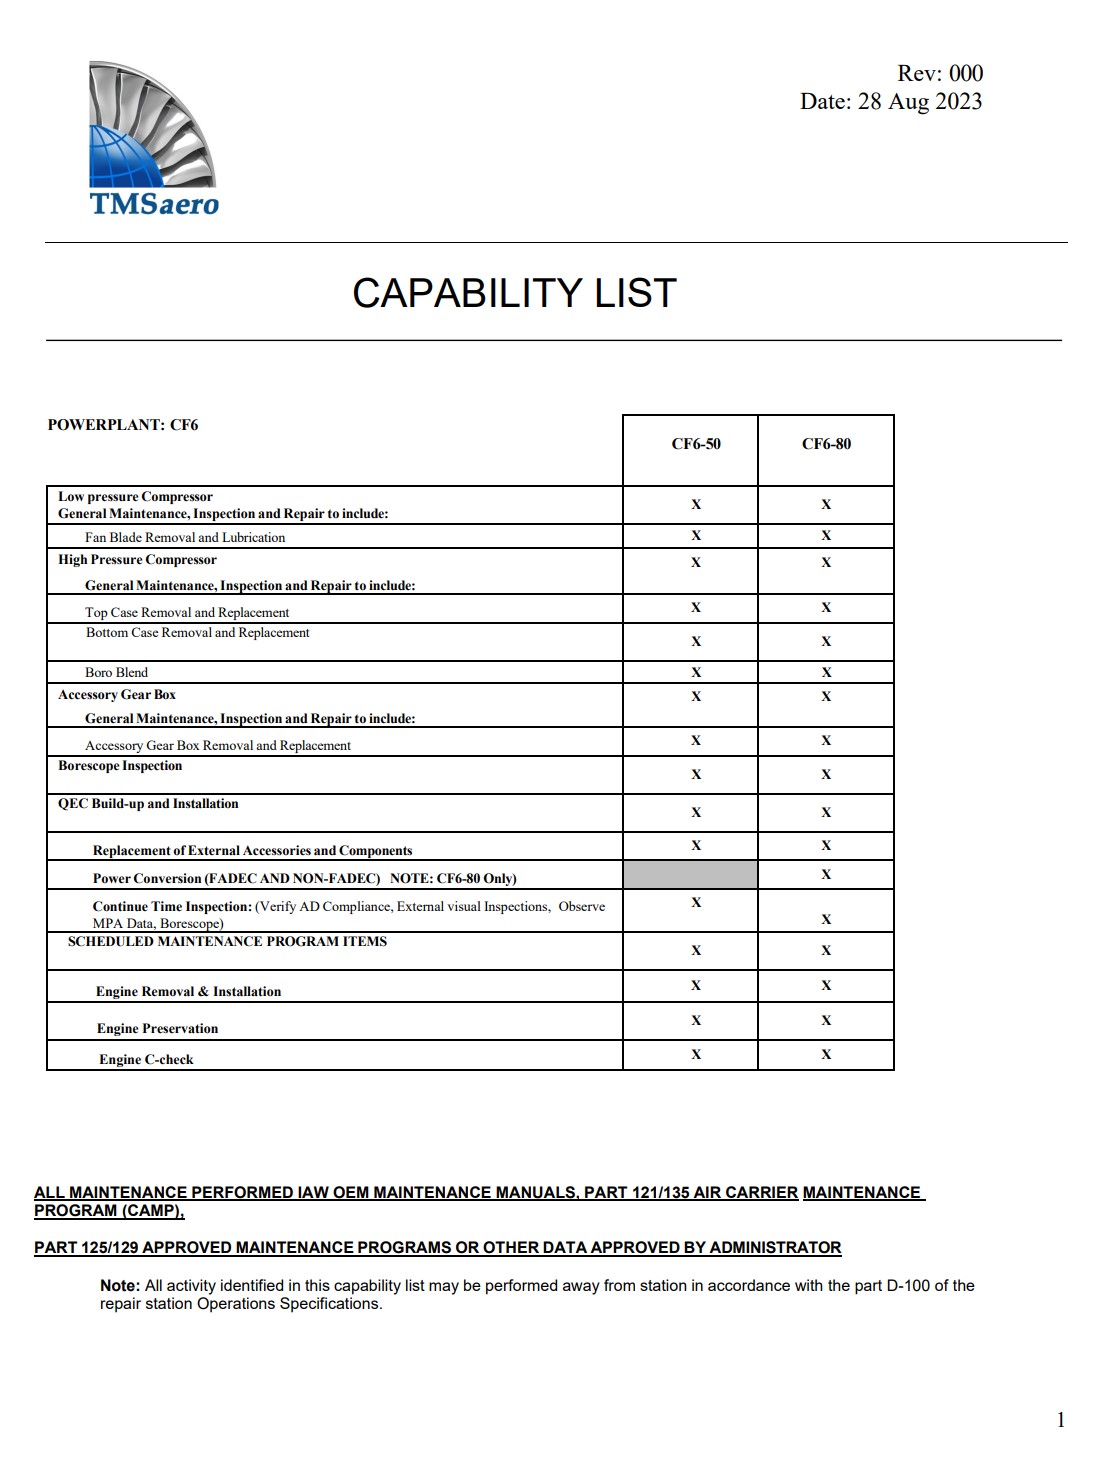 capability-list-thumbnail